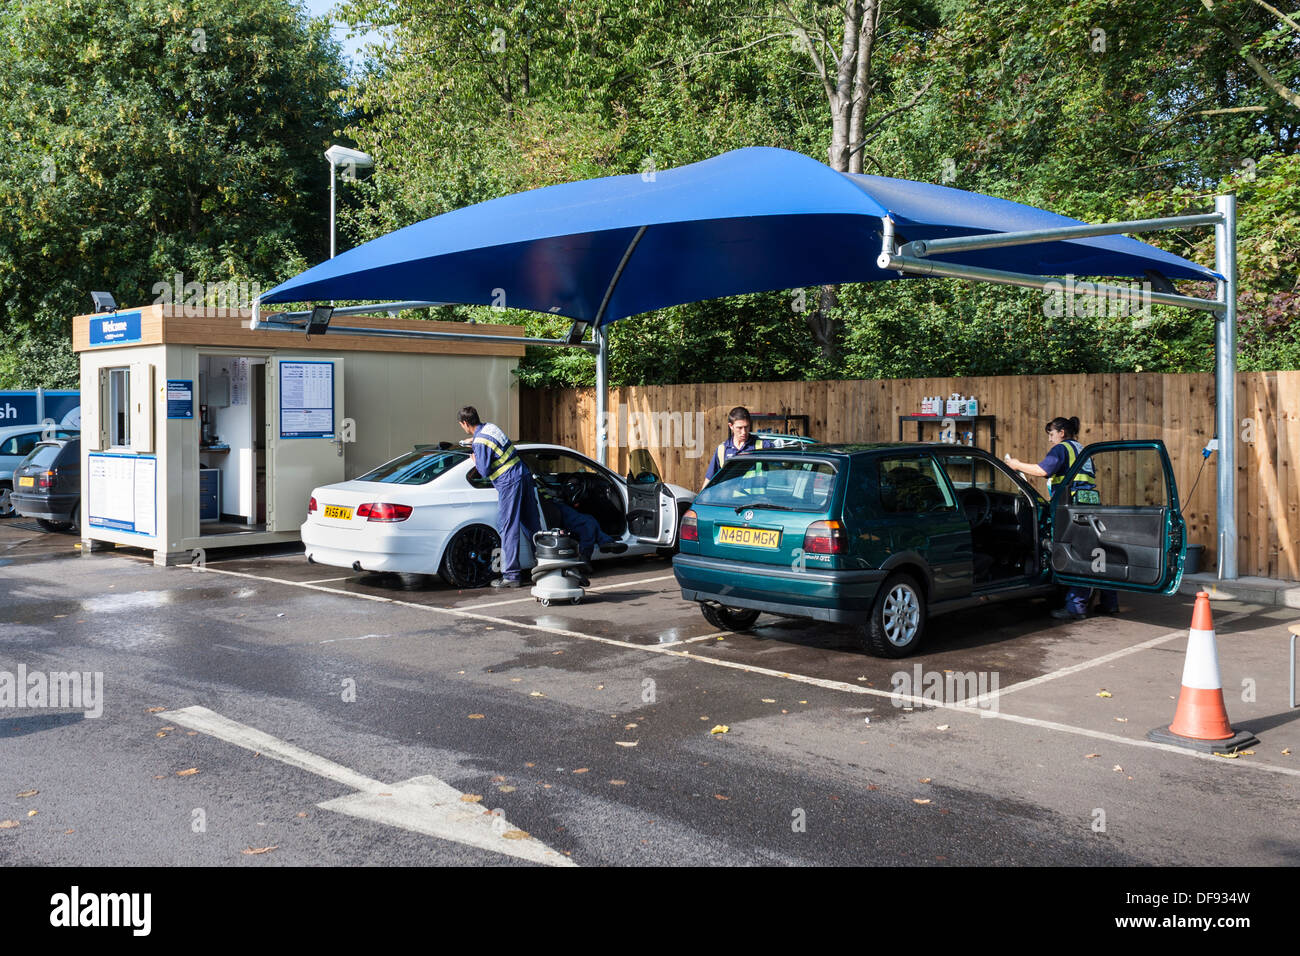 Hand car wash service in Tesco supermarket car park, Reading, Berkshire, England, GB, UK. Stock Photo